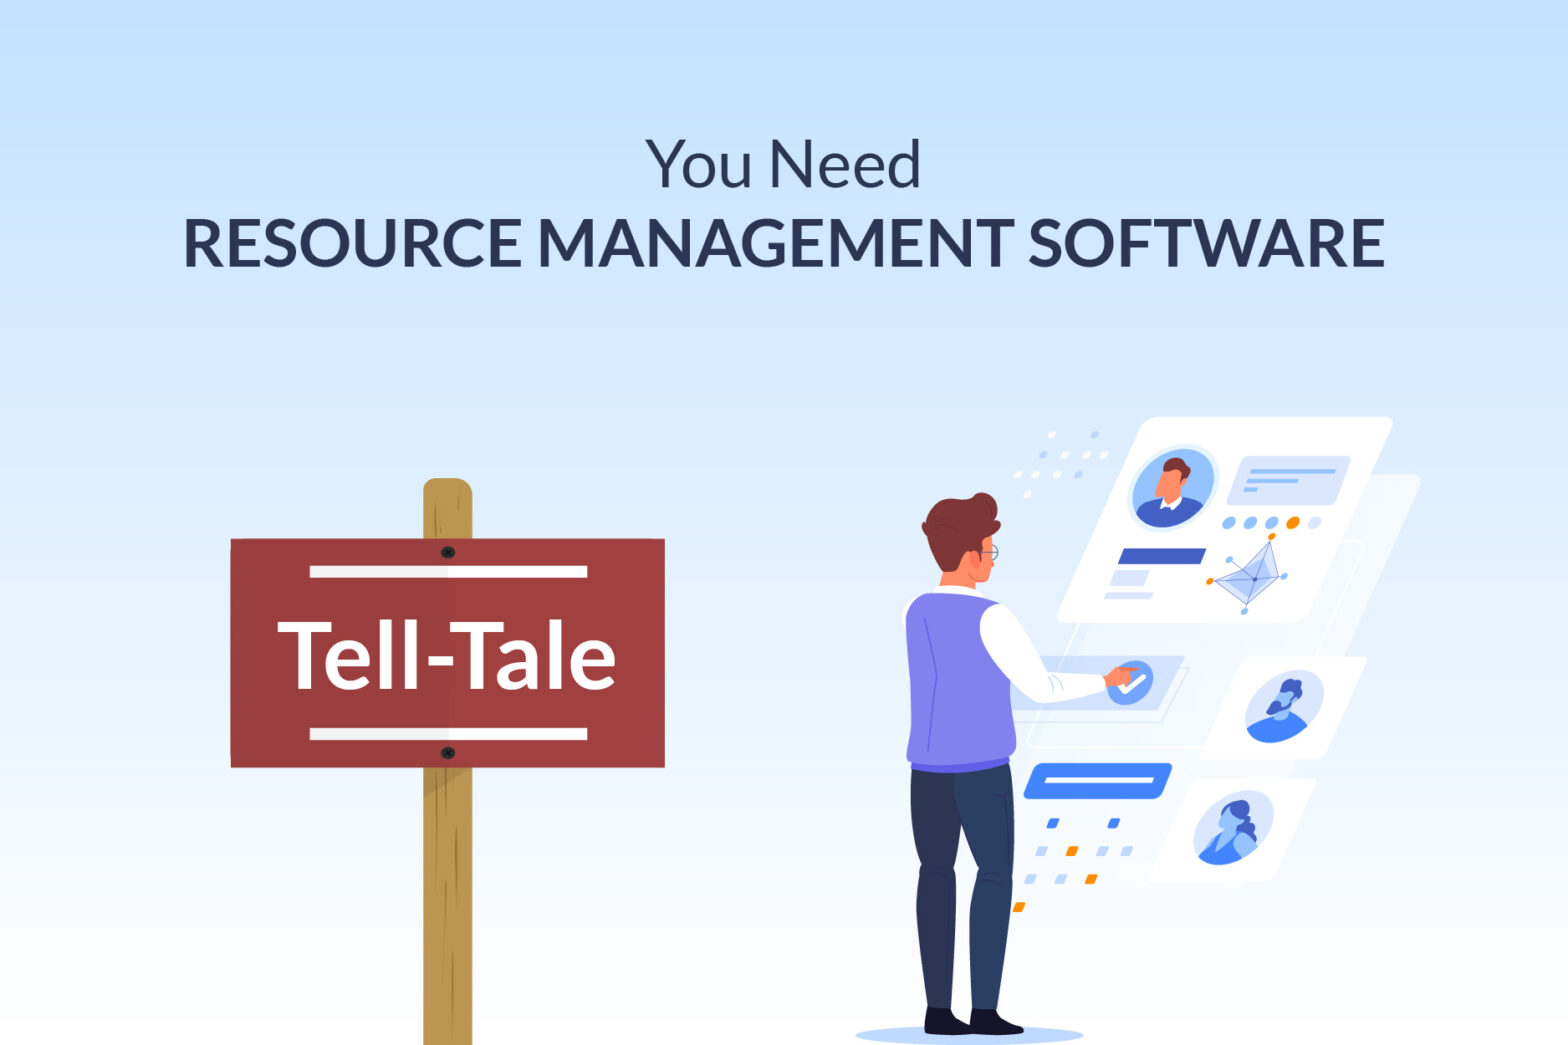 Resource Management Software